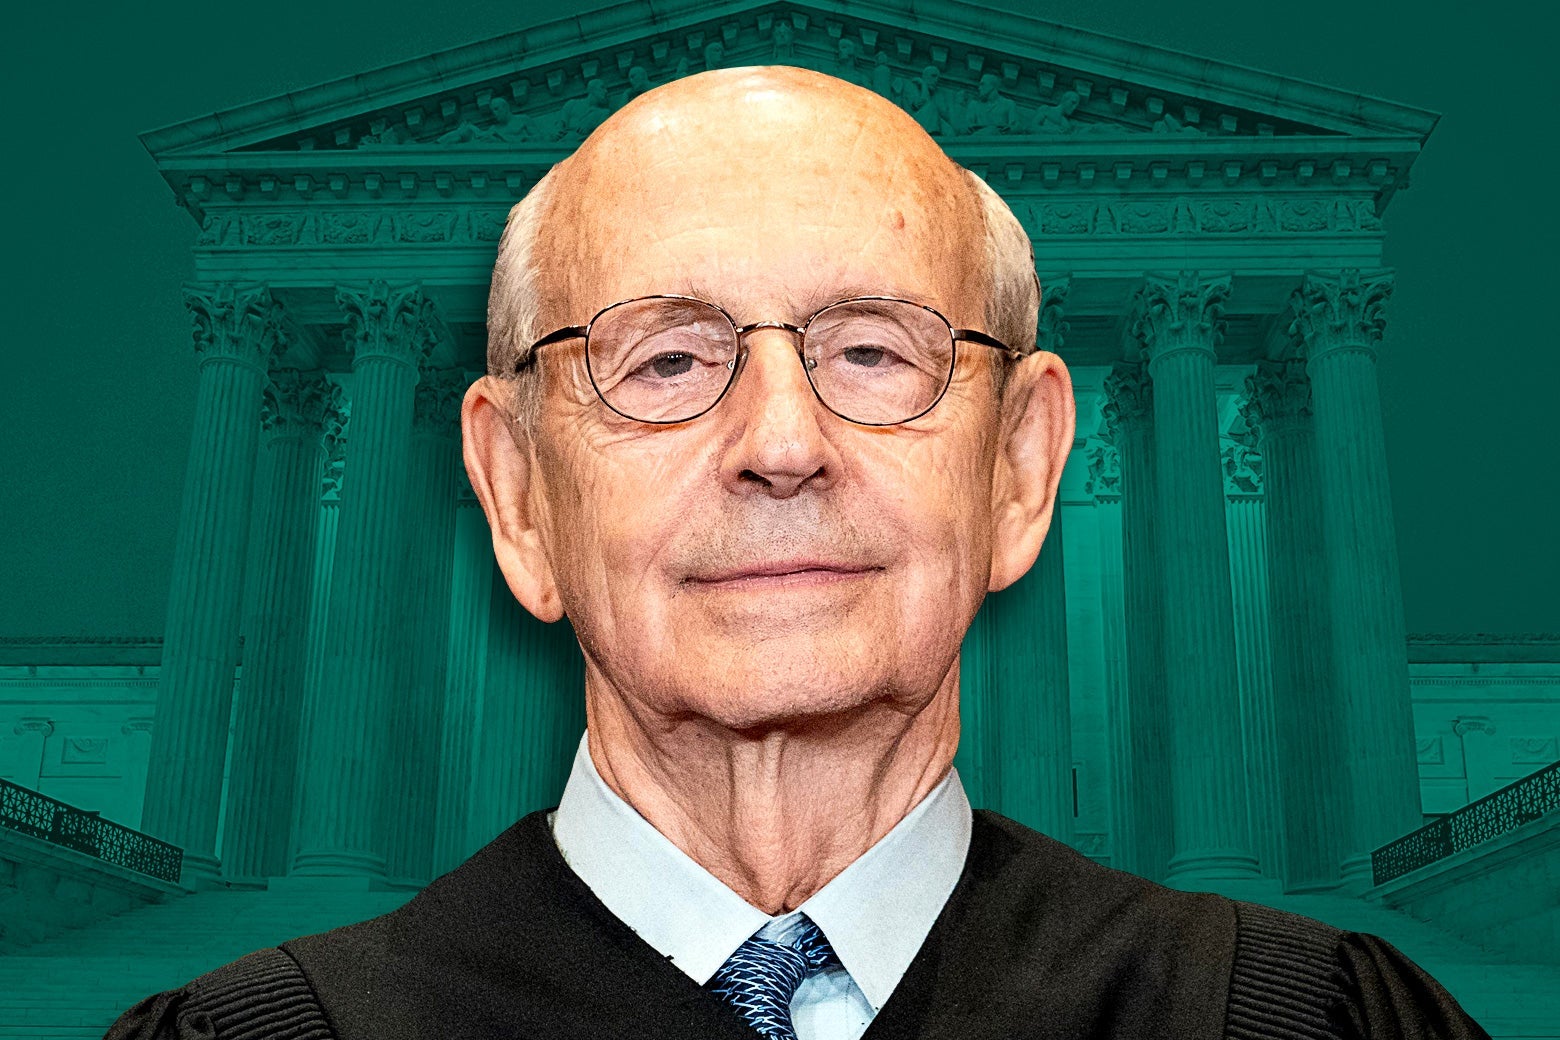 Justice Stephen Breyer looking placid.